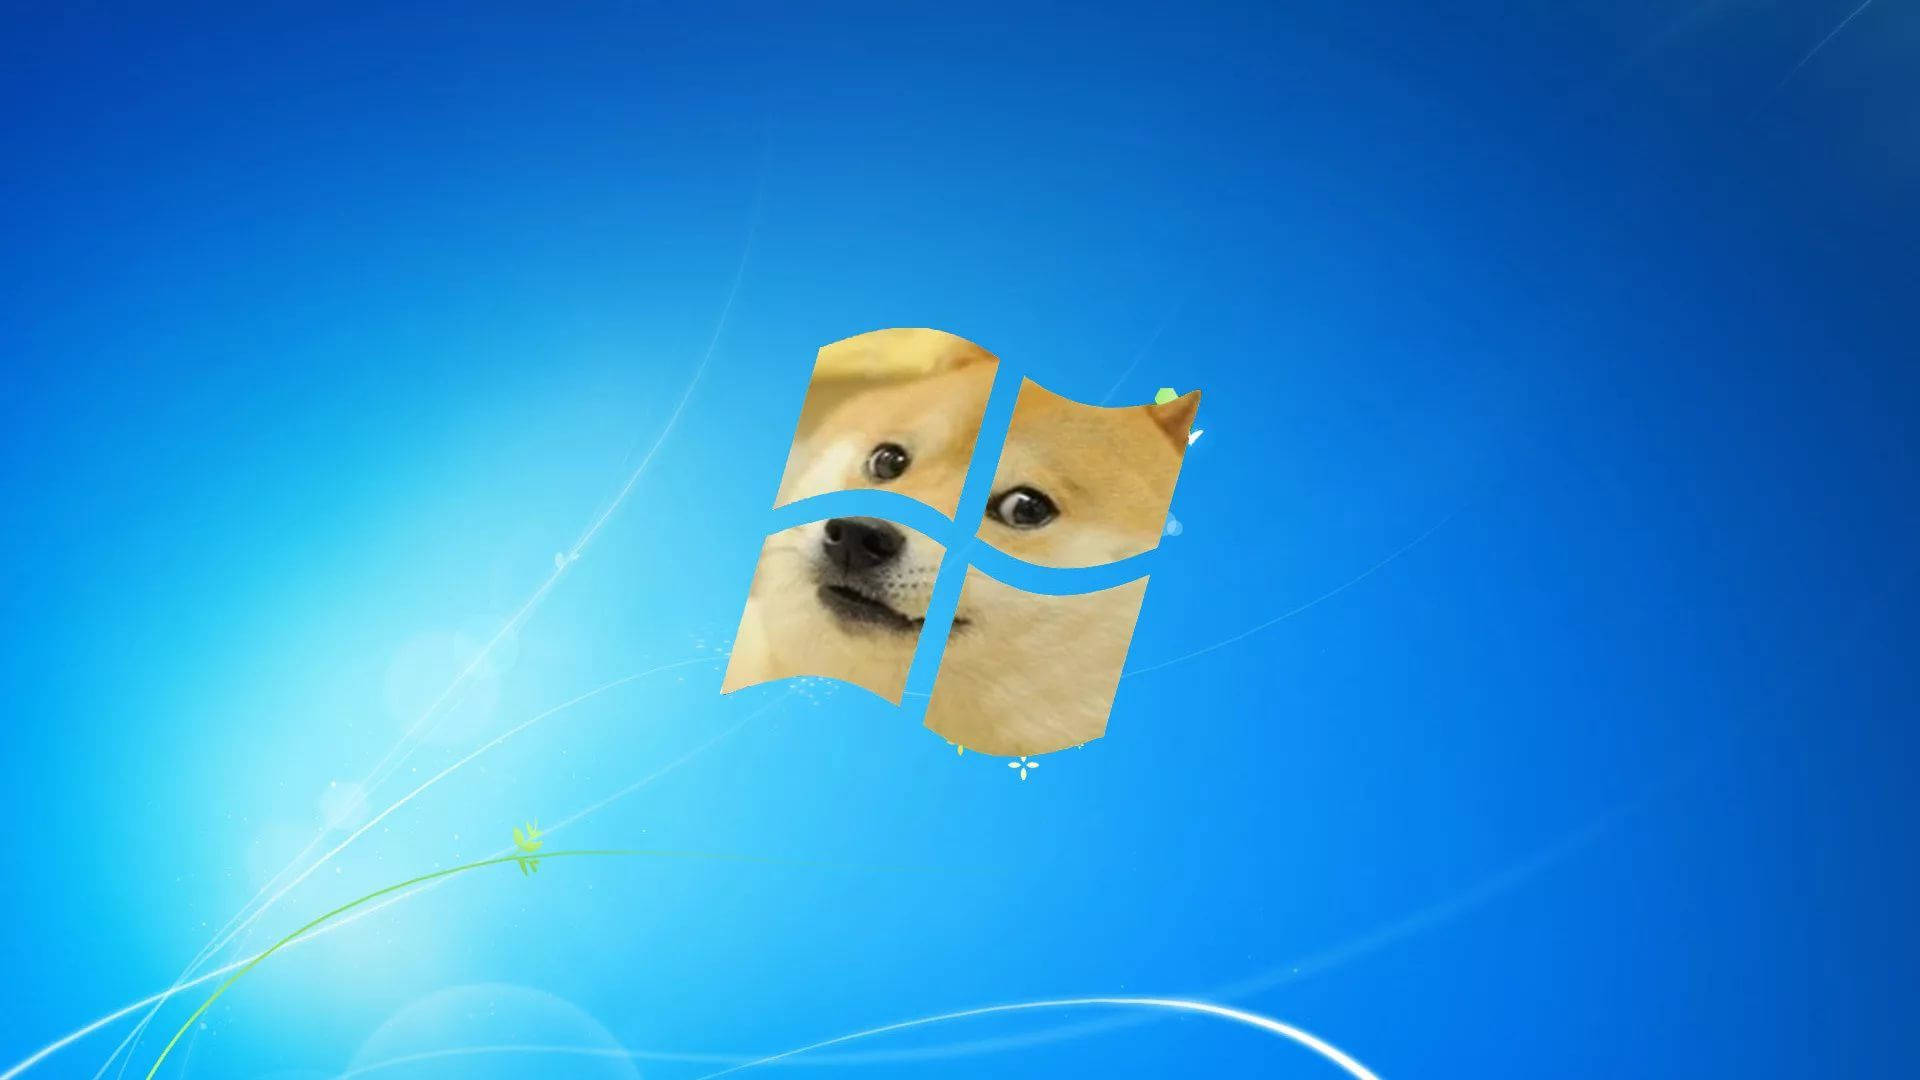 Doge meme on windows logo, dog's face in desktop.